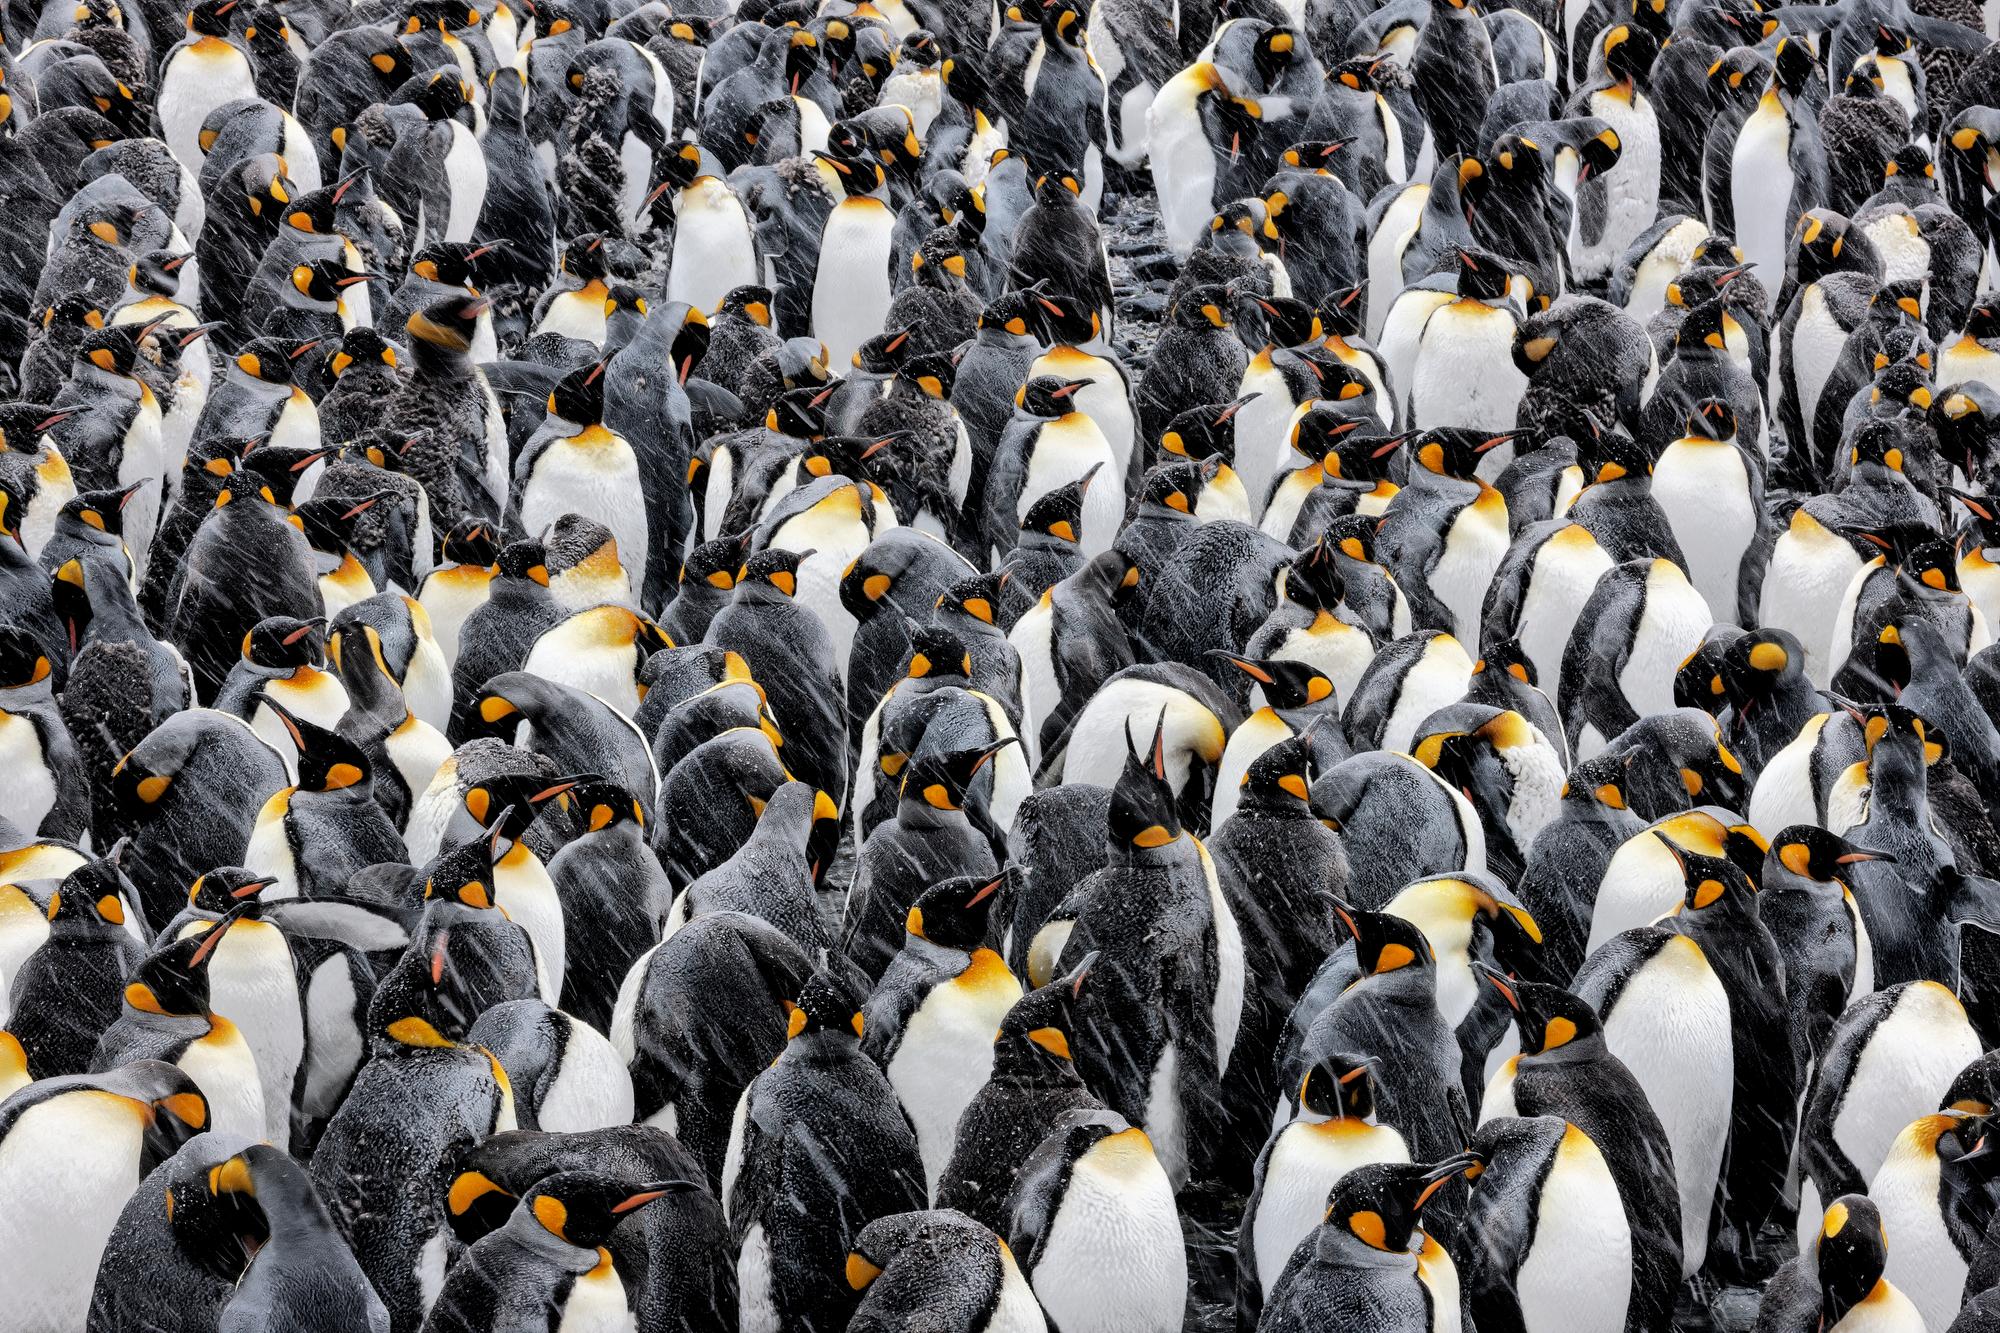 Paul Nicklen Color Photograph - Kings of Antarctica